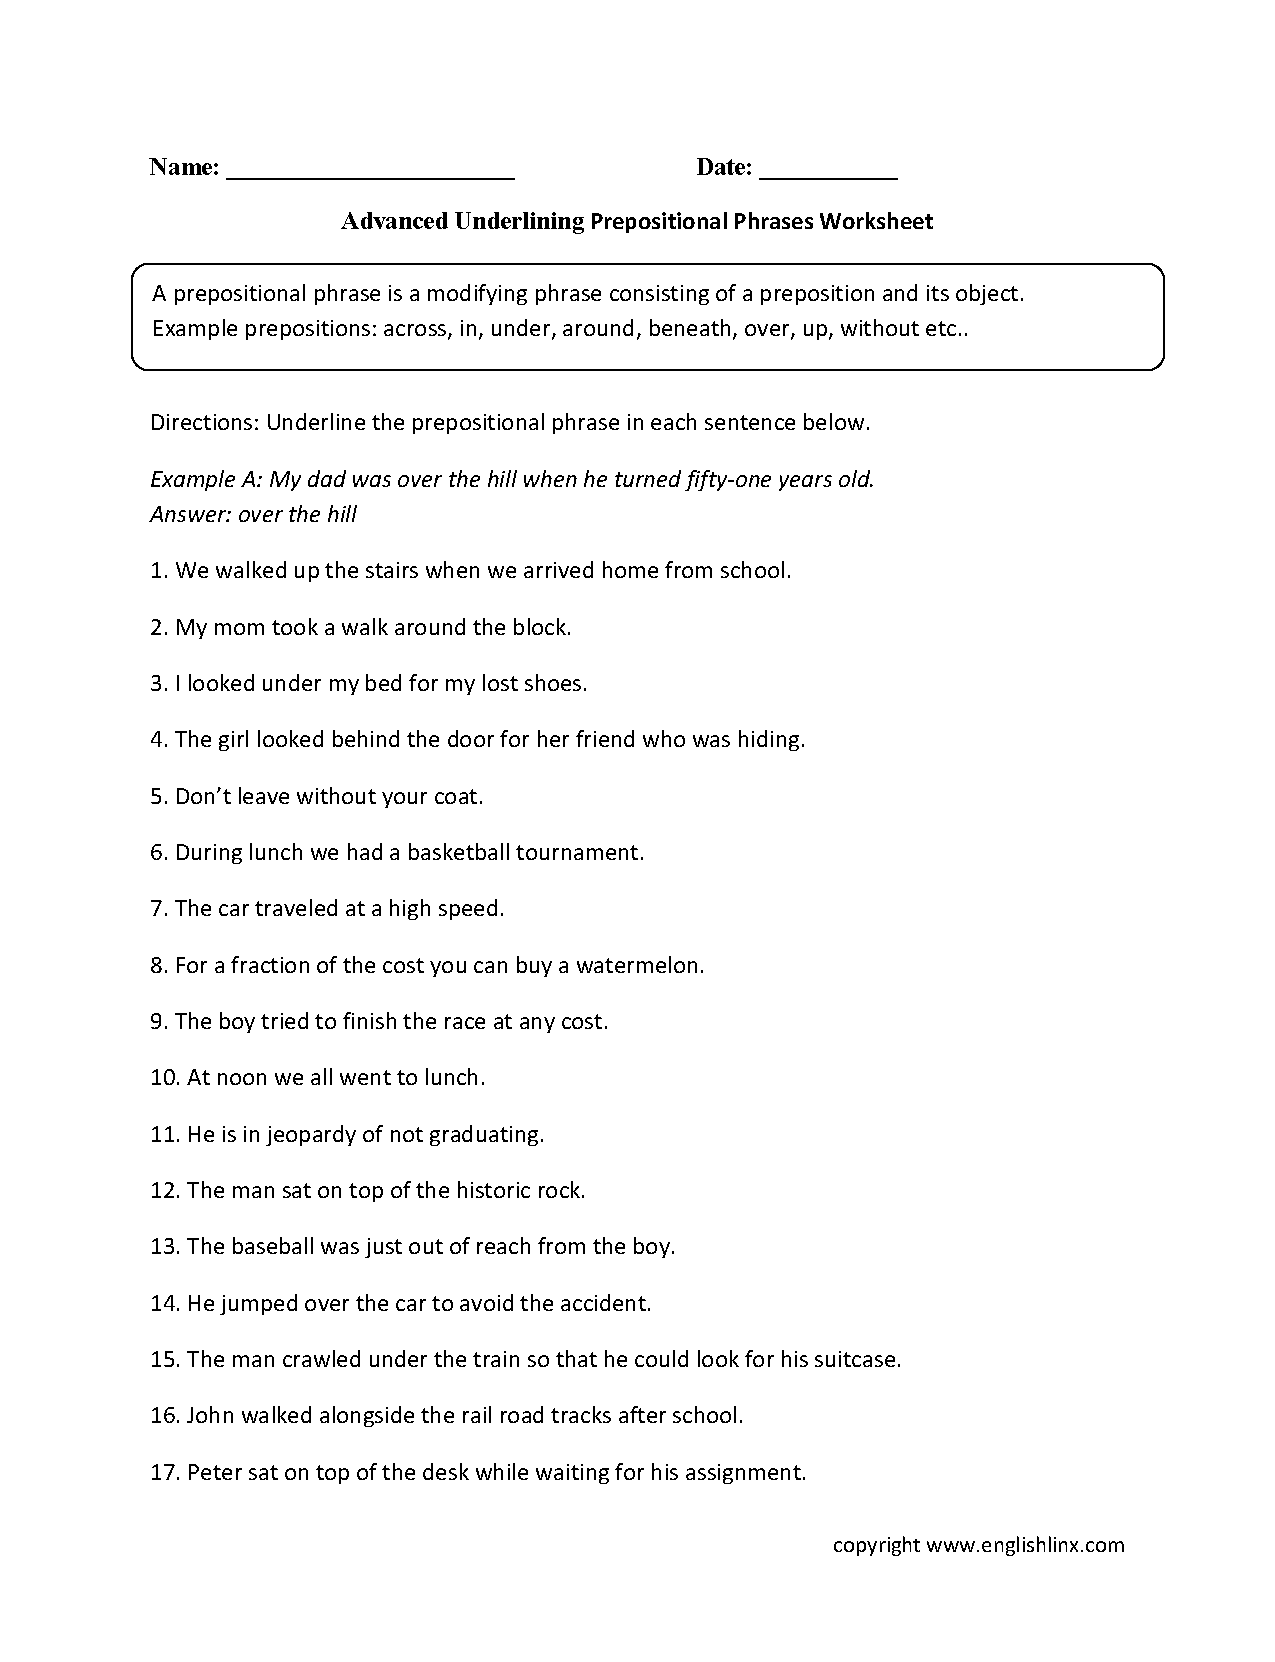 Underlining a Prepositional Phrase Worksheet